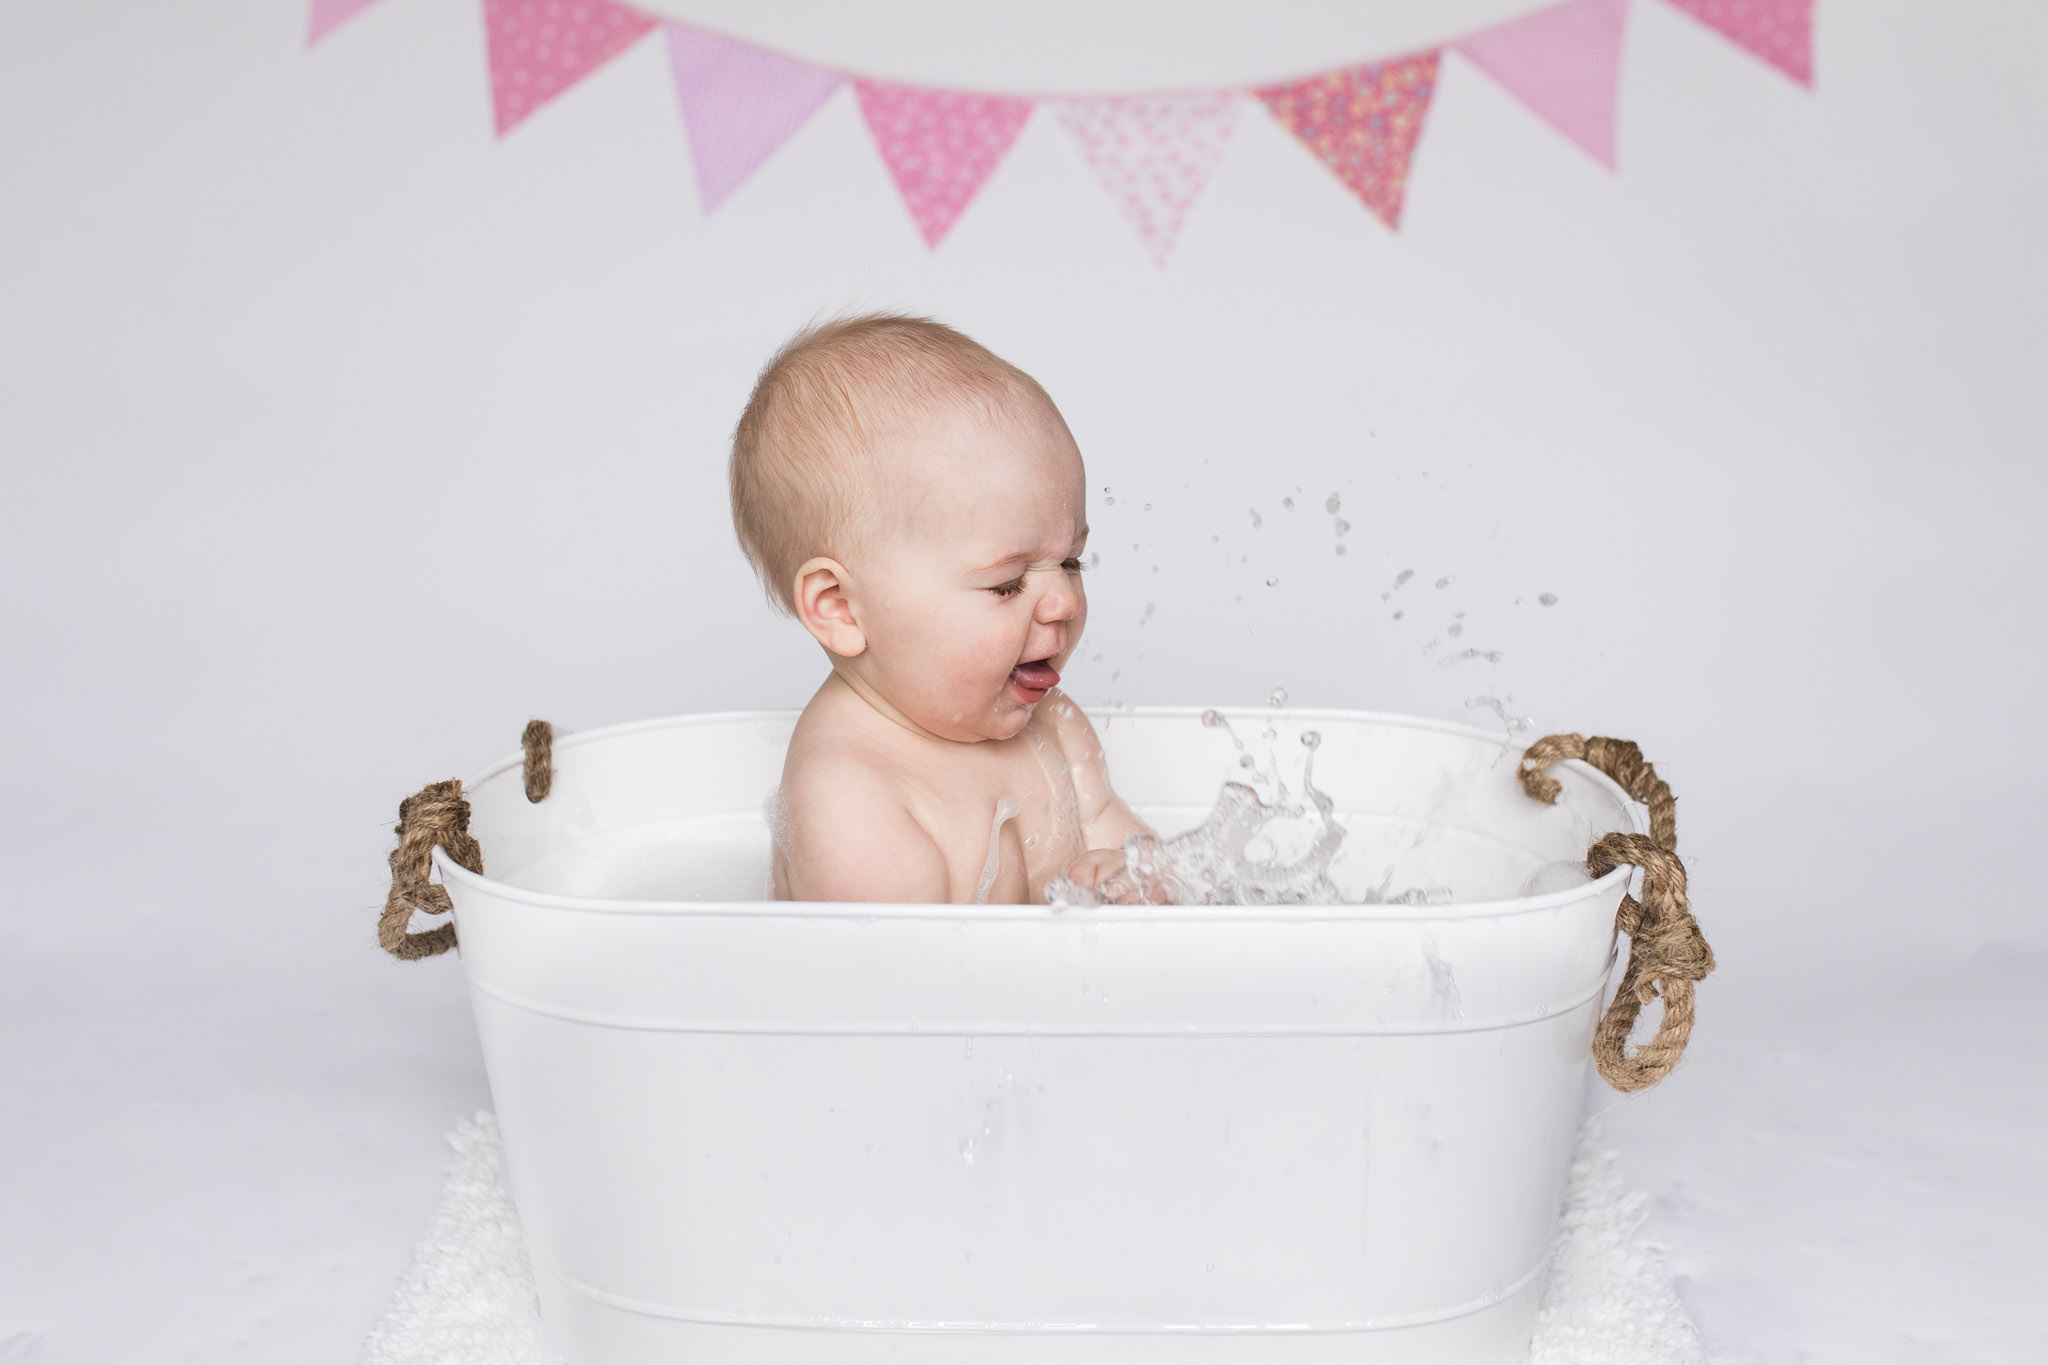 cake smash aberdeen - child laughing and splashing in white splash bath - debbie dee photography